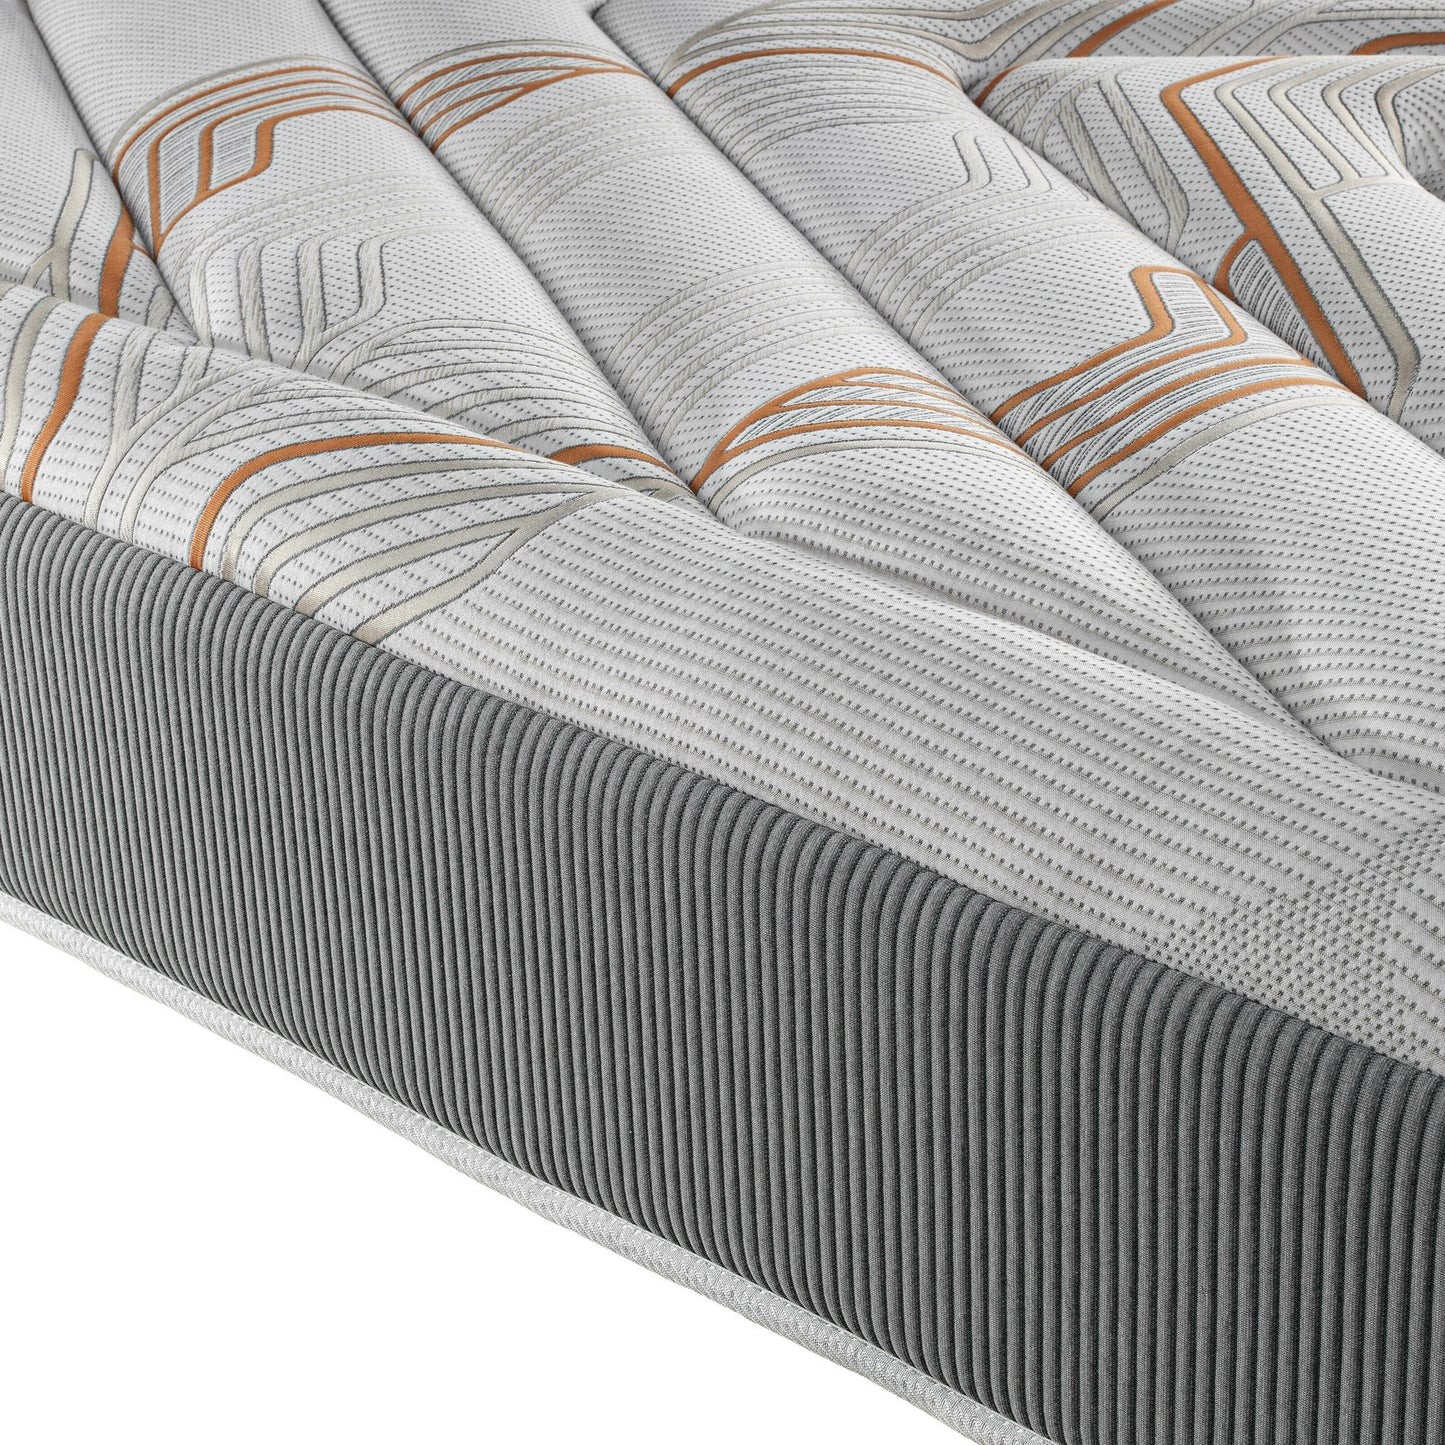 Colchón de material celular avanzado Bultex Confort - CASIOPEA - 150x200